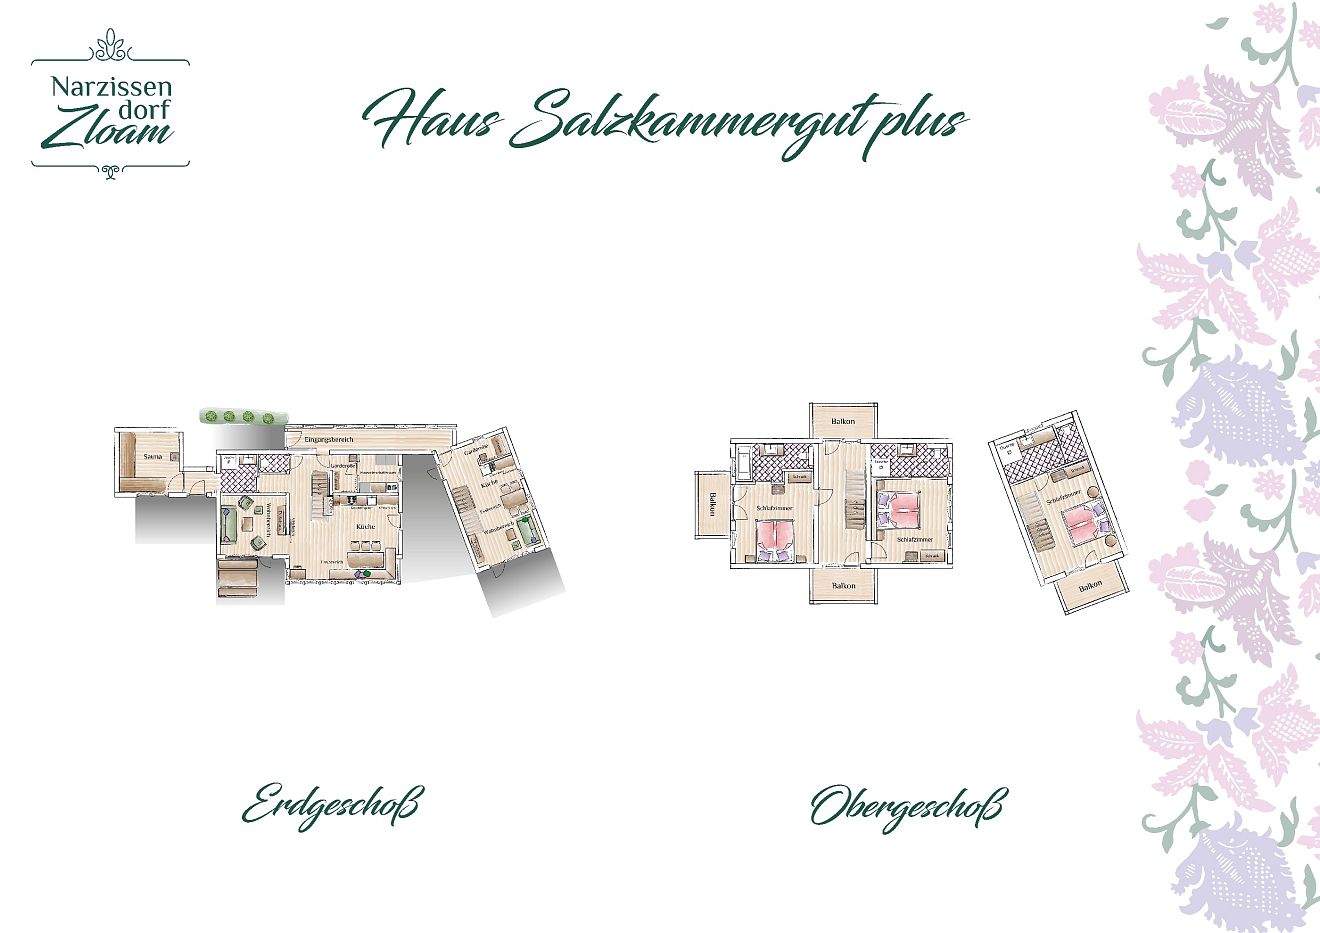 Ferienhaus Salzkammergut plus